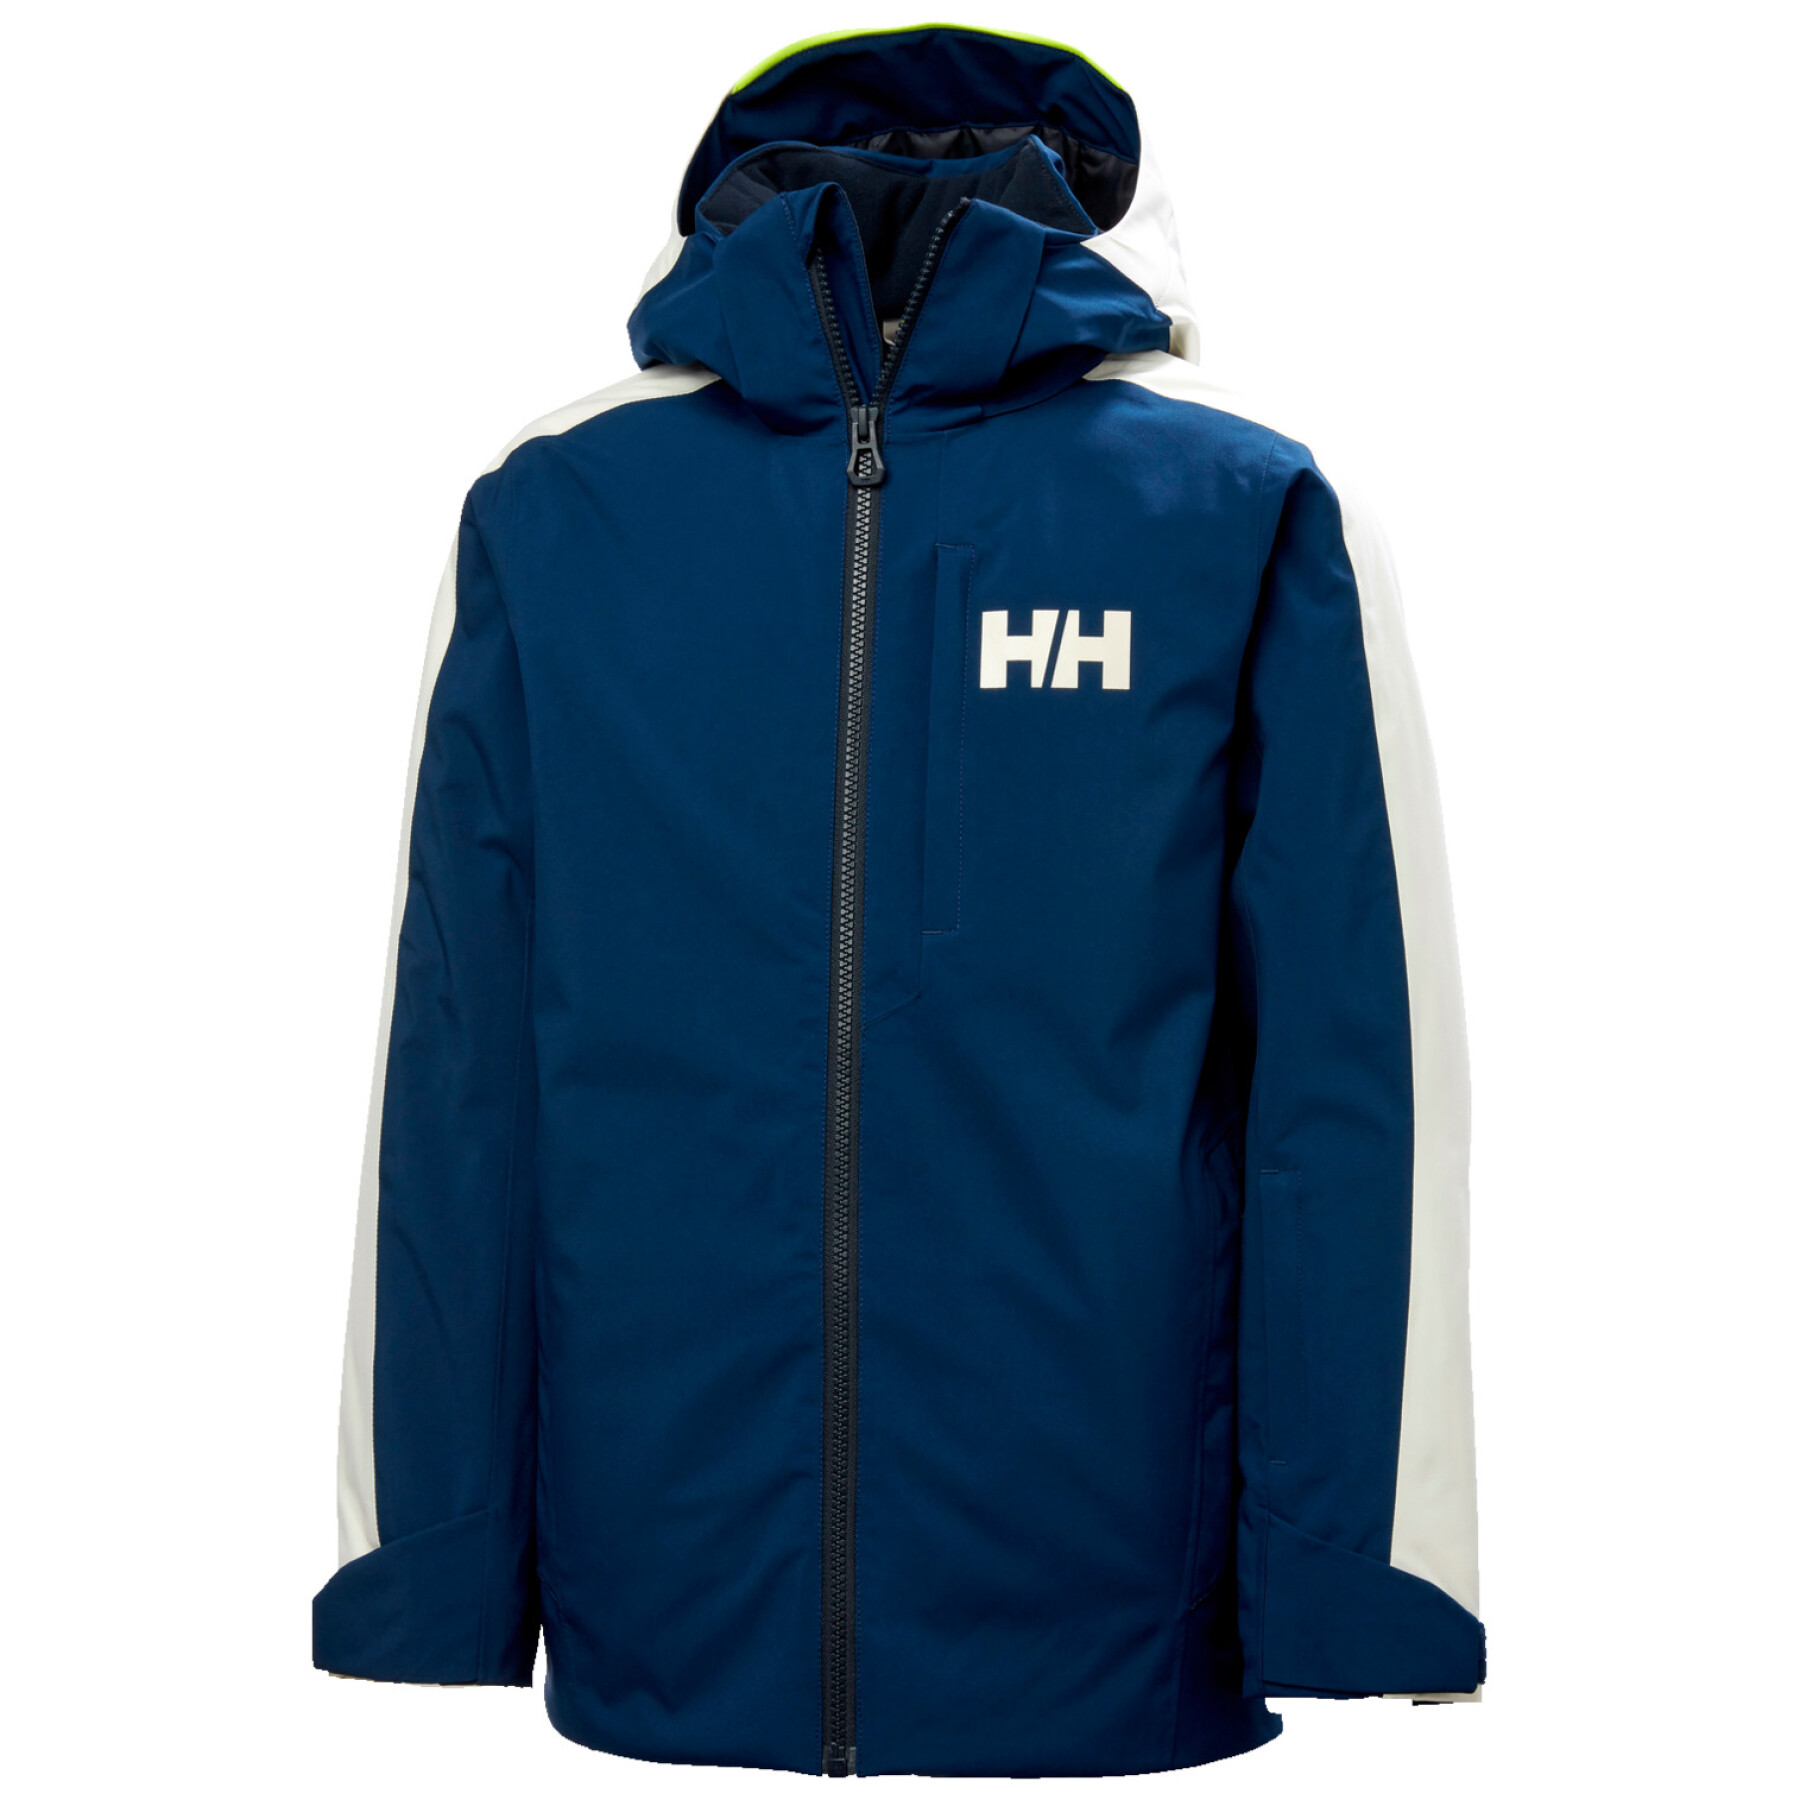 Giacca da sci per bambini Helly Hansen Hightland